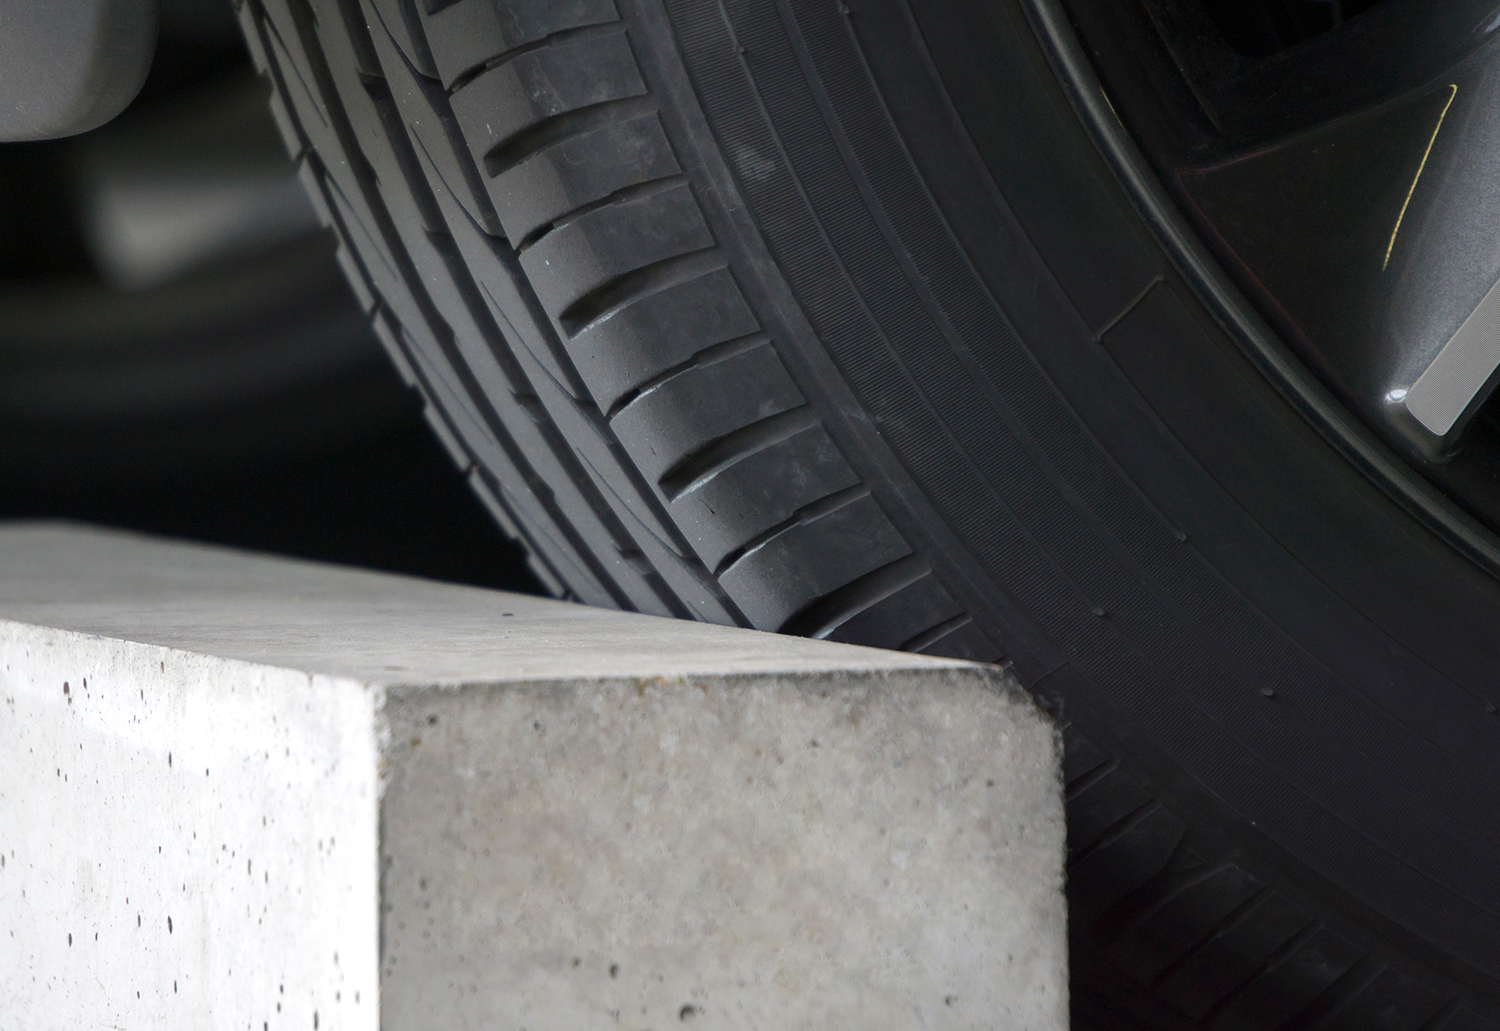 Car's tire touching precast concrete wheel stops